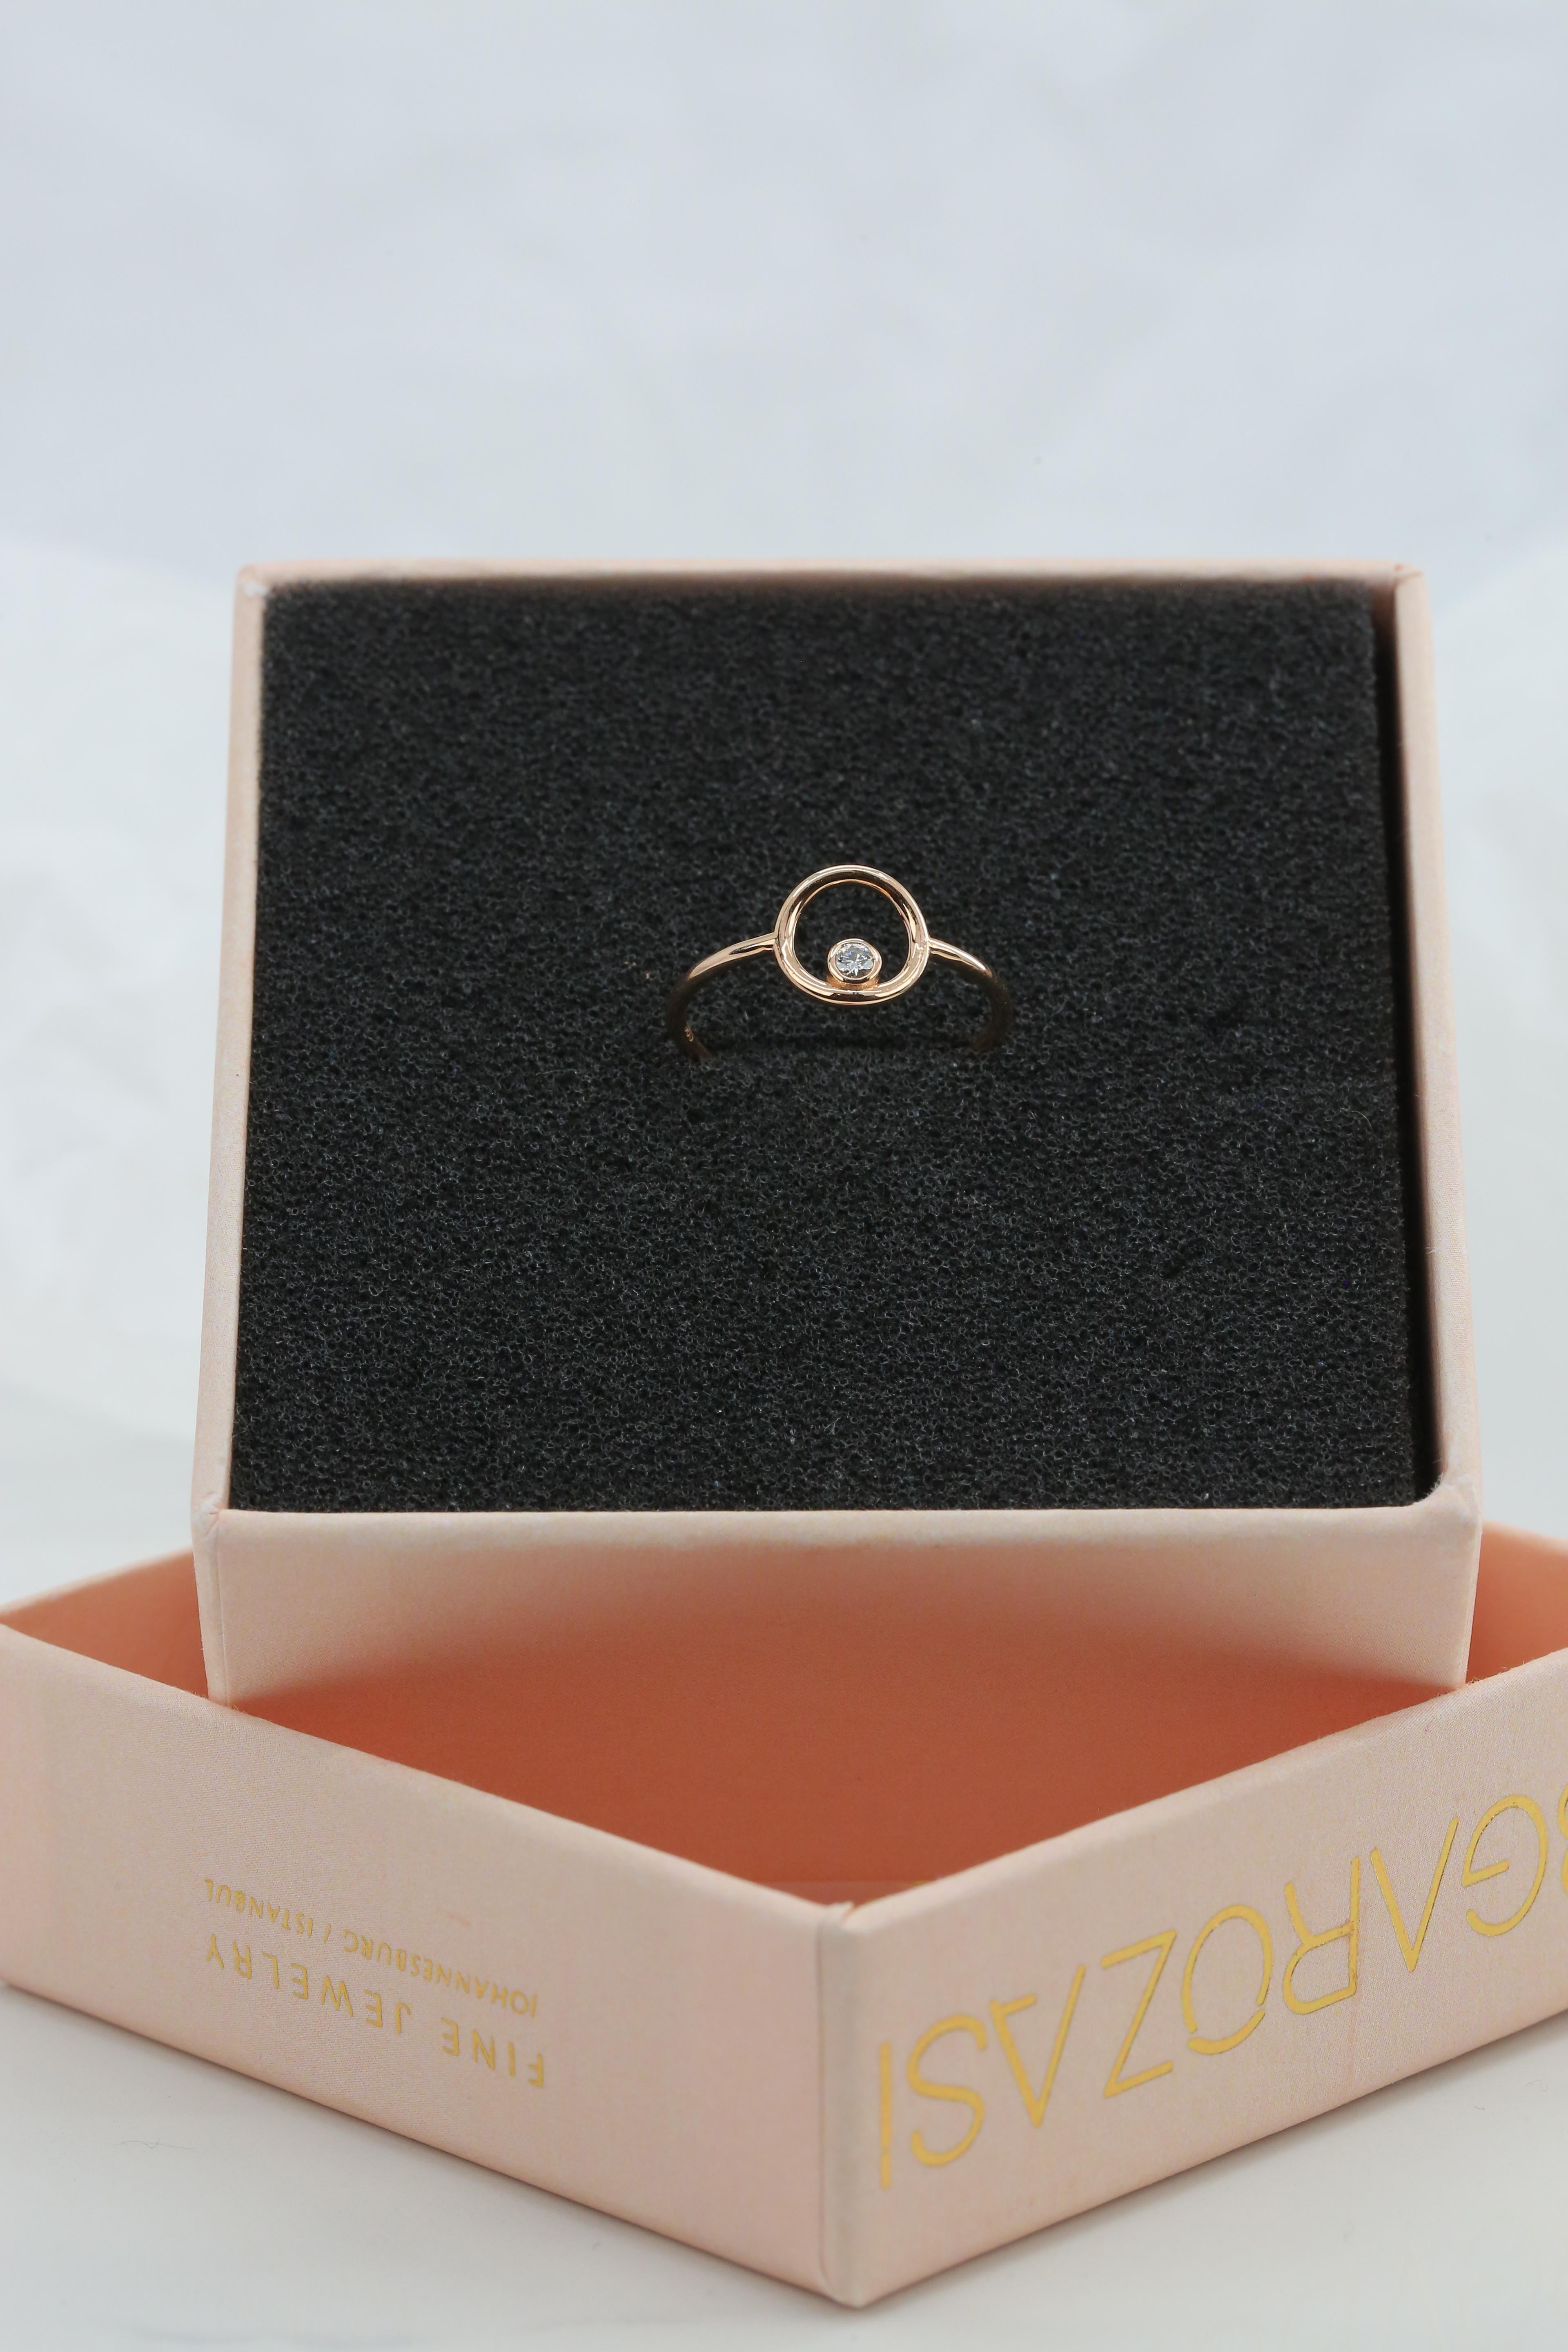 For Sale:  14K Gold Open Circle Ring with Diamond, 14K Gold 0.05 Carat Diamond Karma Ring 4